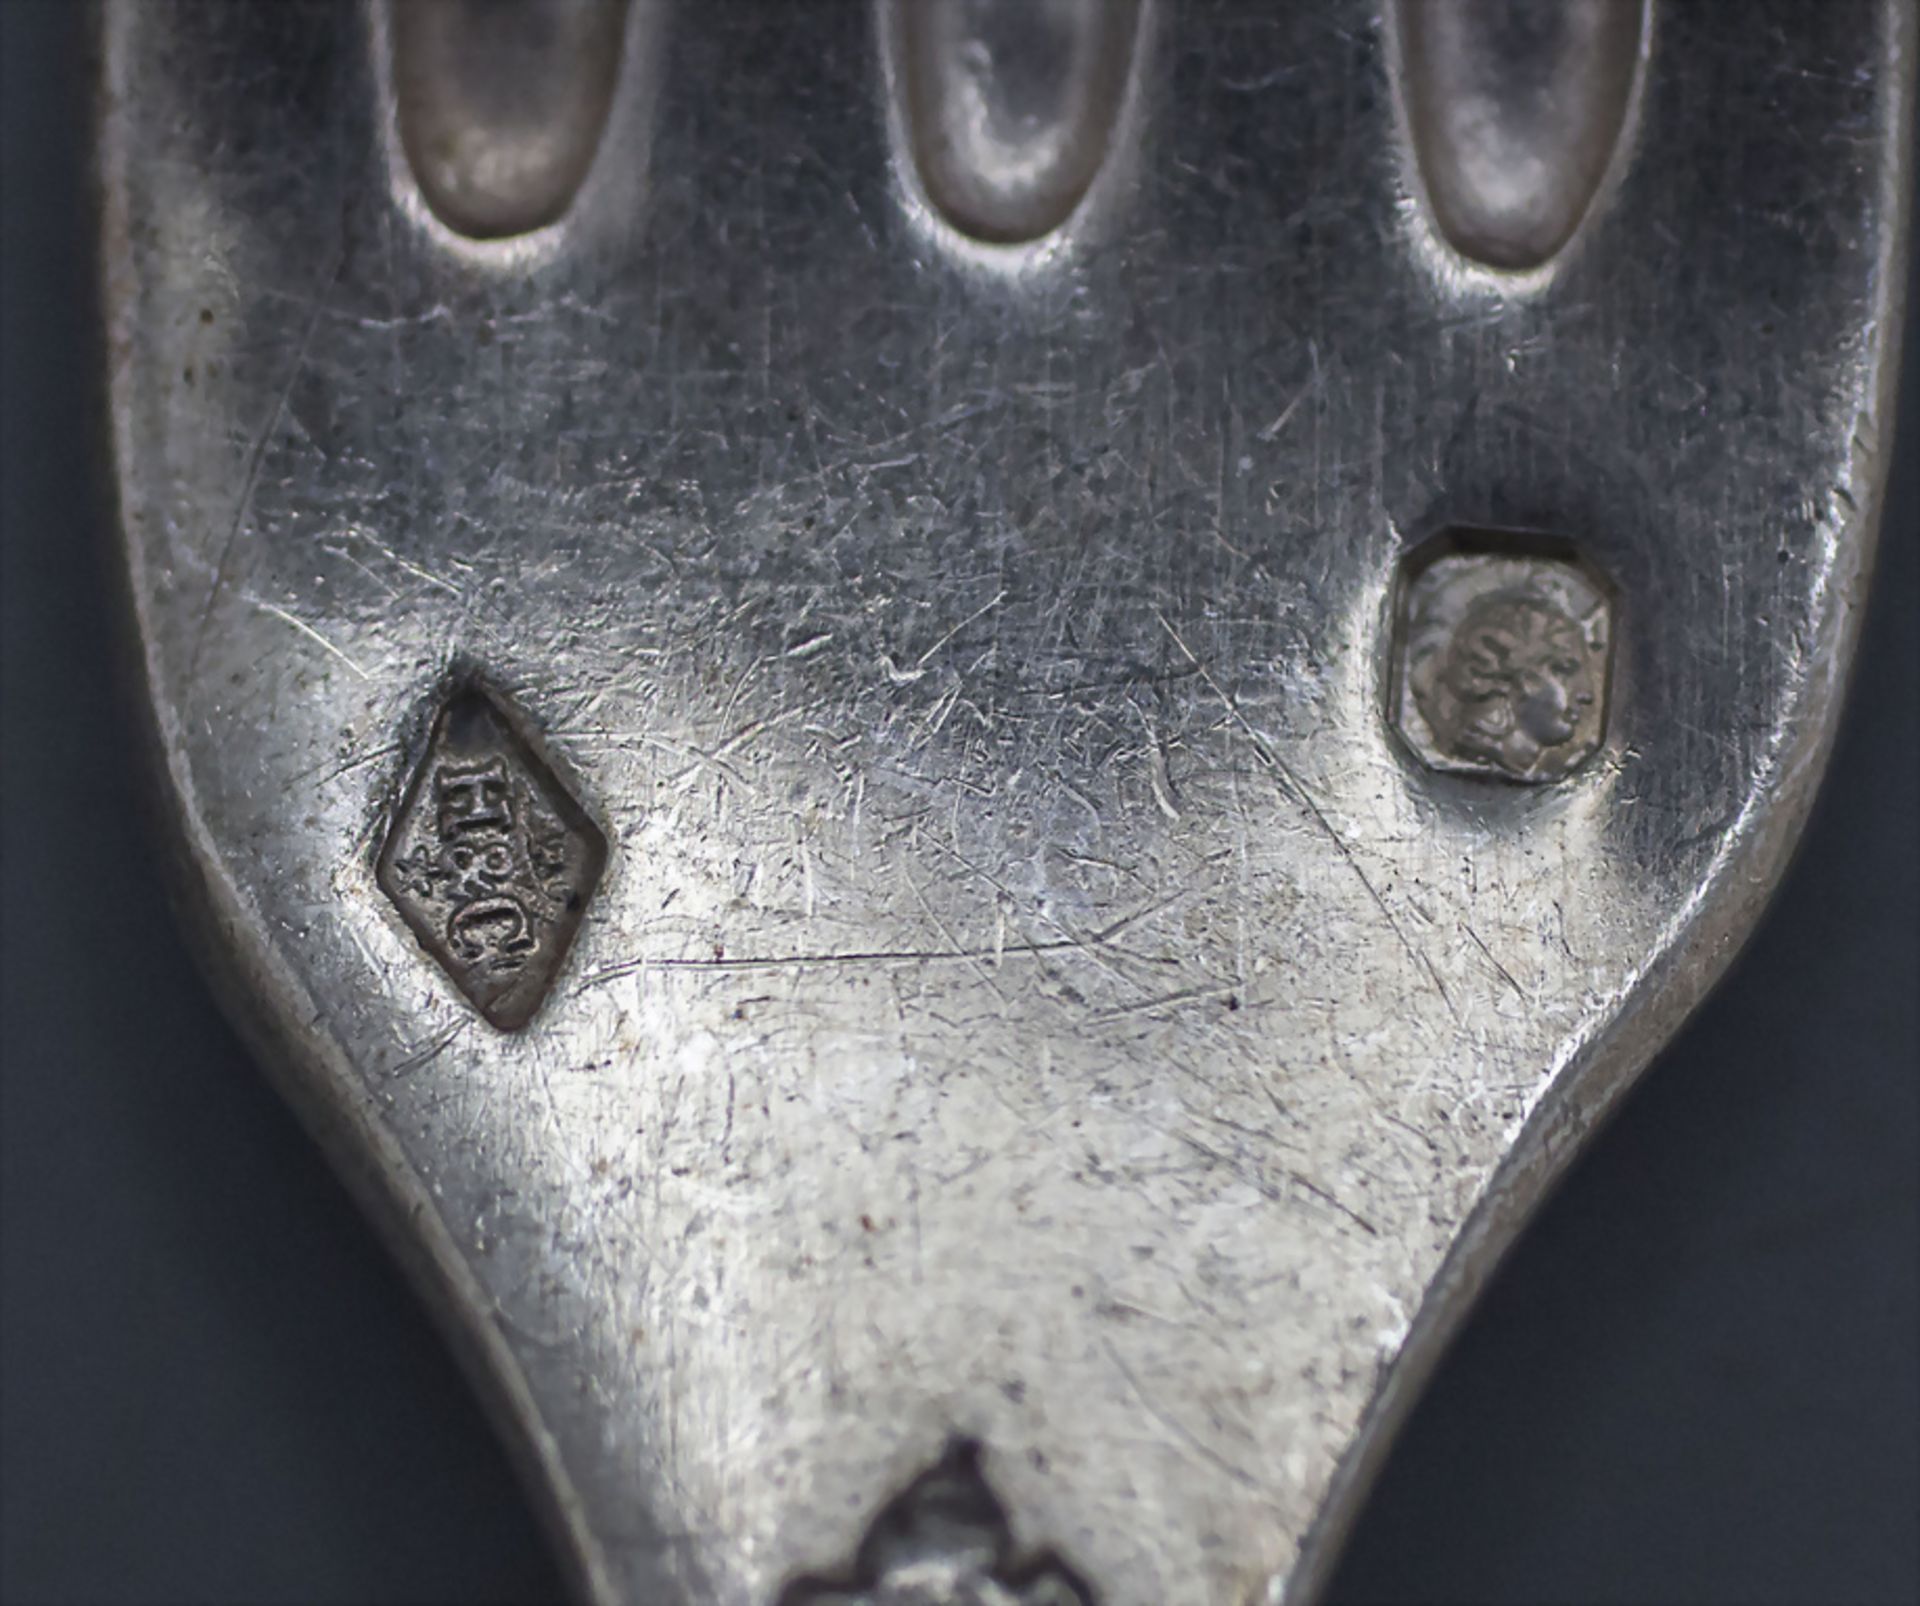 24 tlg. Besteck / A 24-piece set of silver cutlery, Hènin & Cie, Paris, um 1870 - Bild 7 aus 8